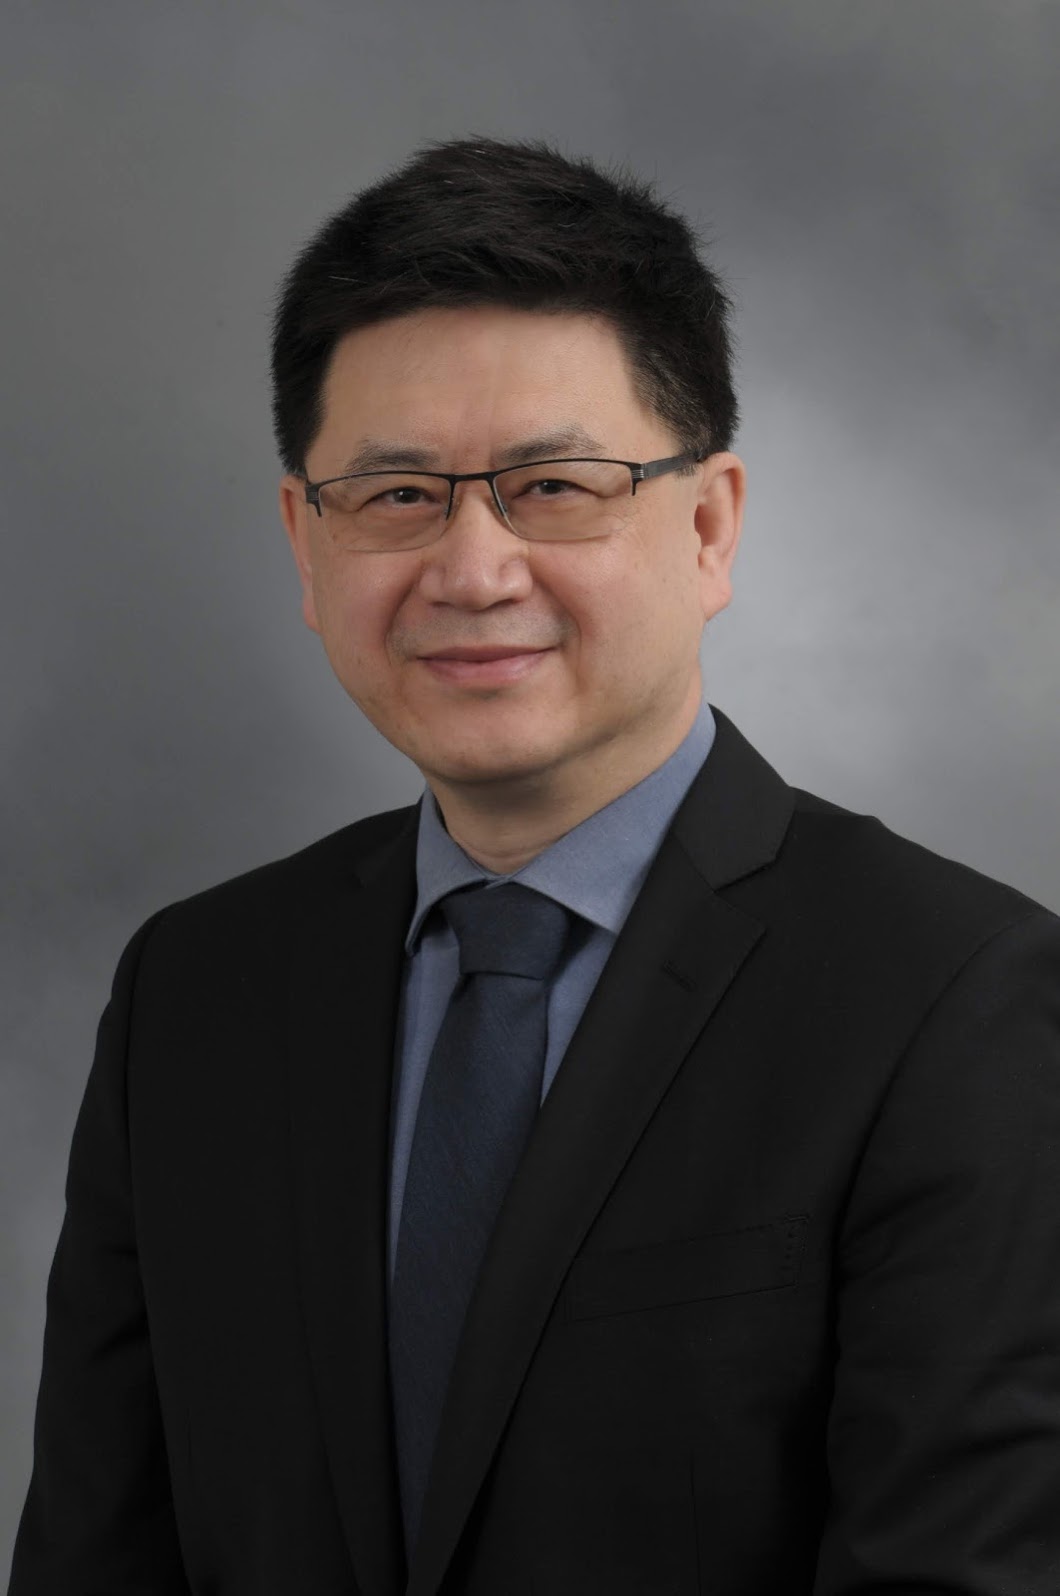 Professor Jingfang Ju